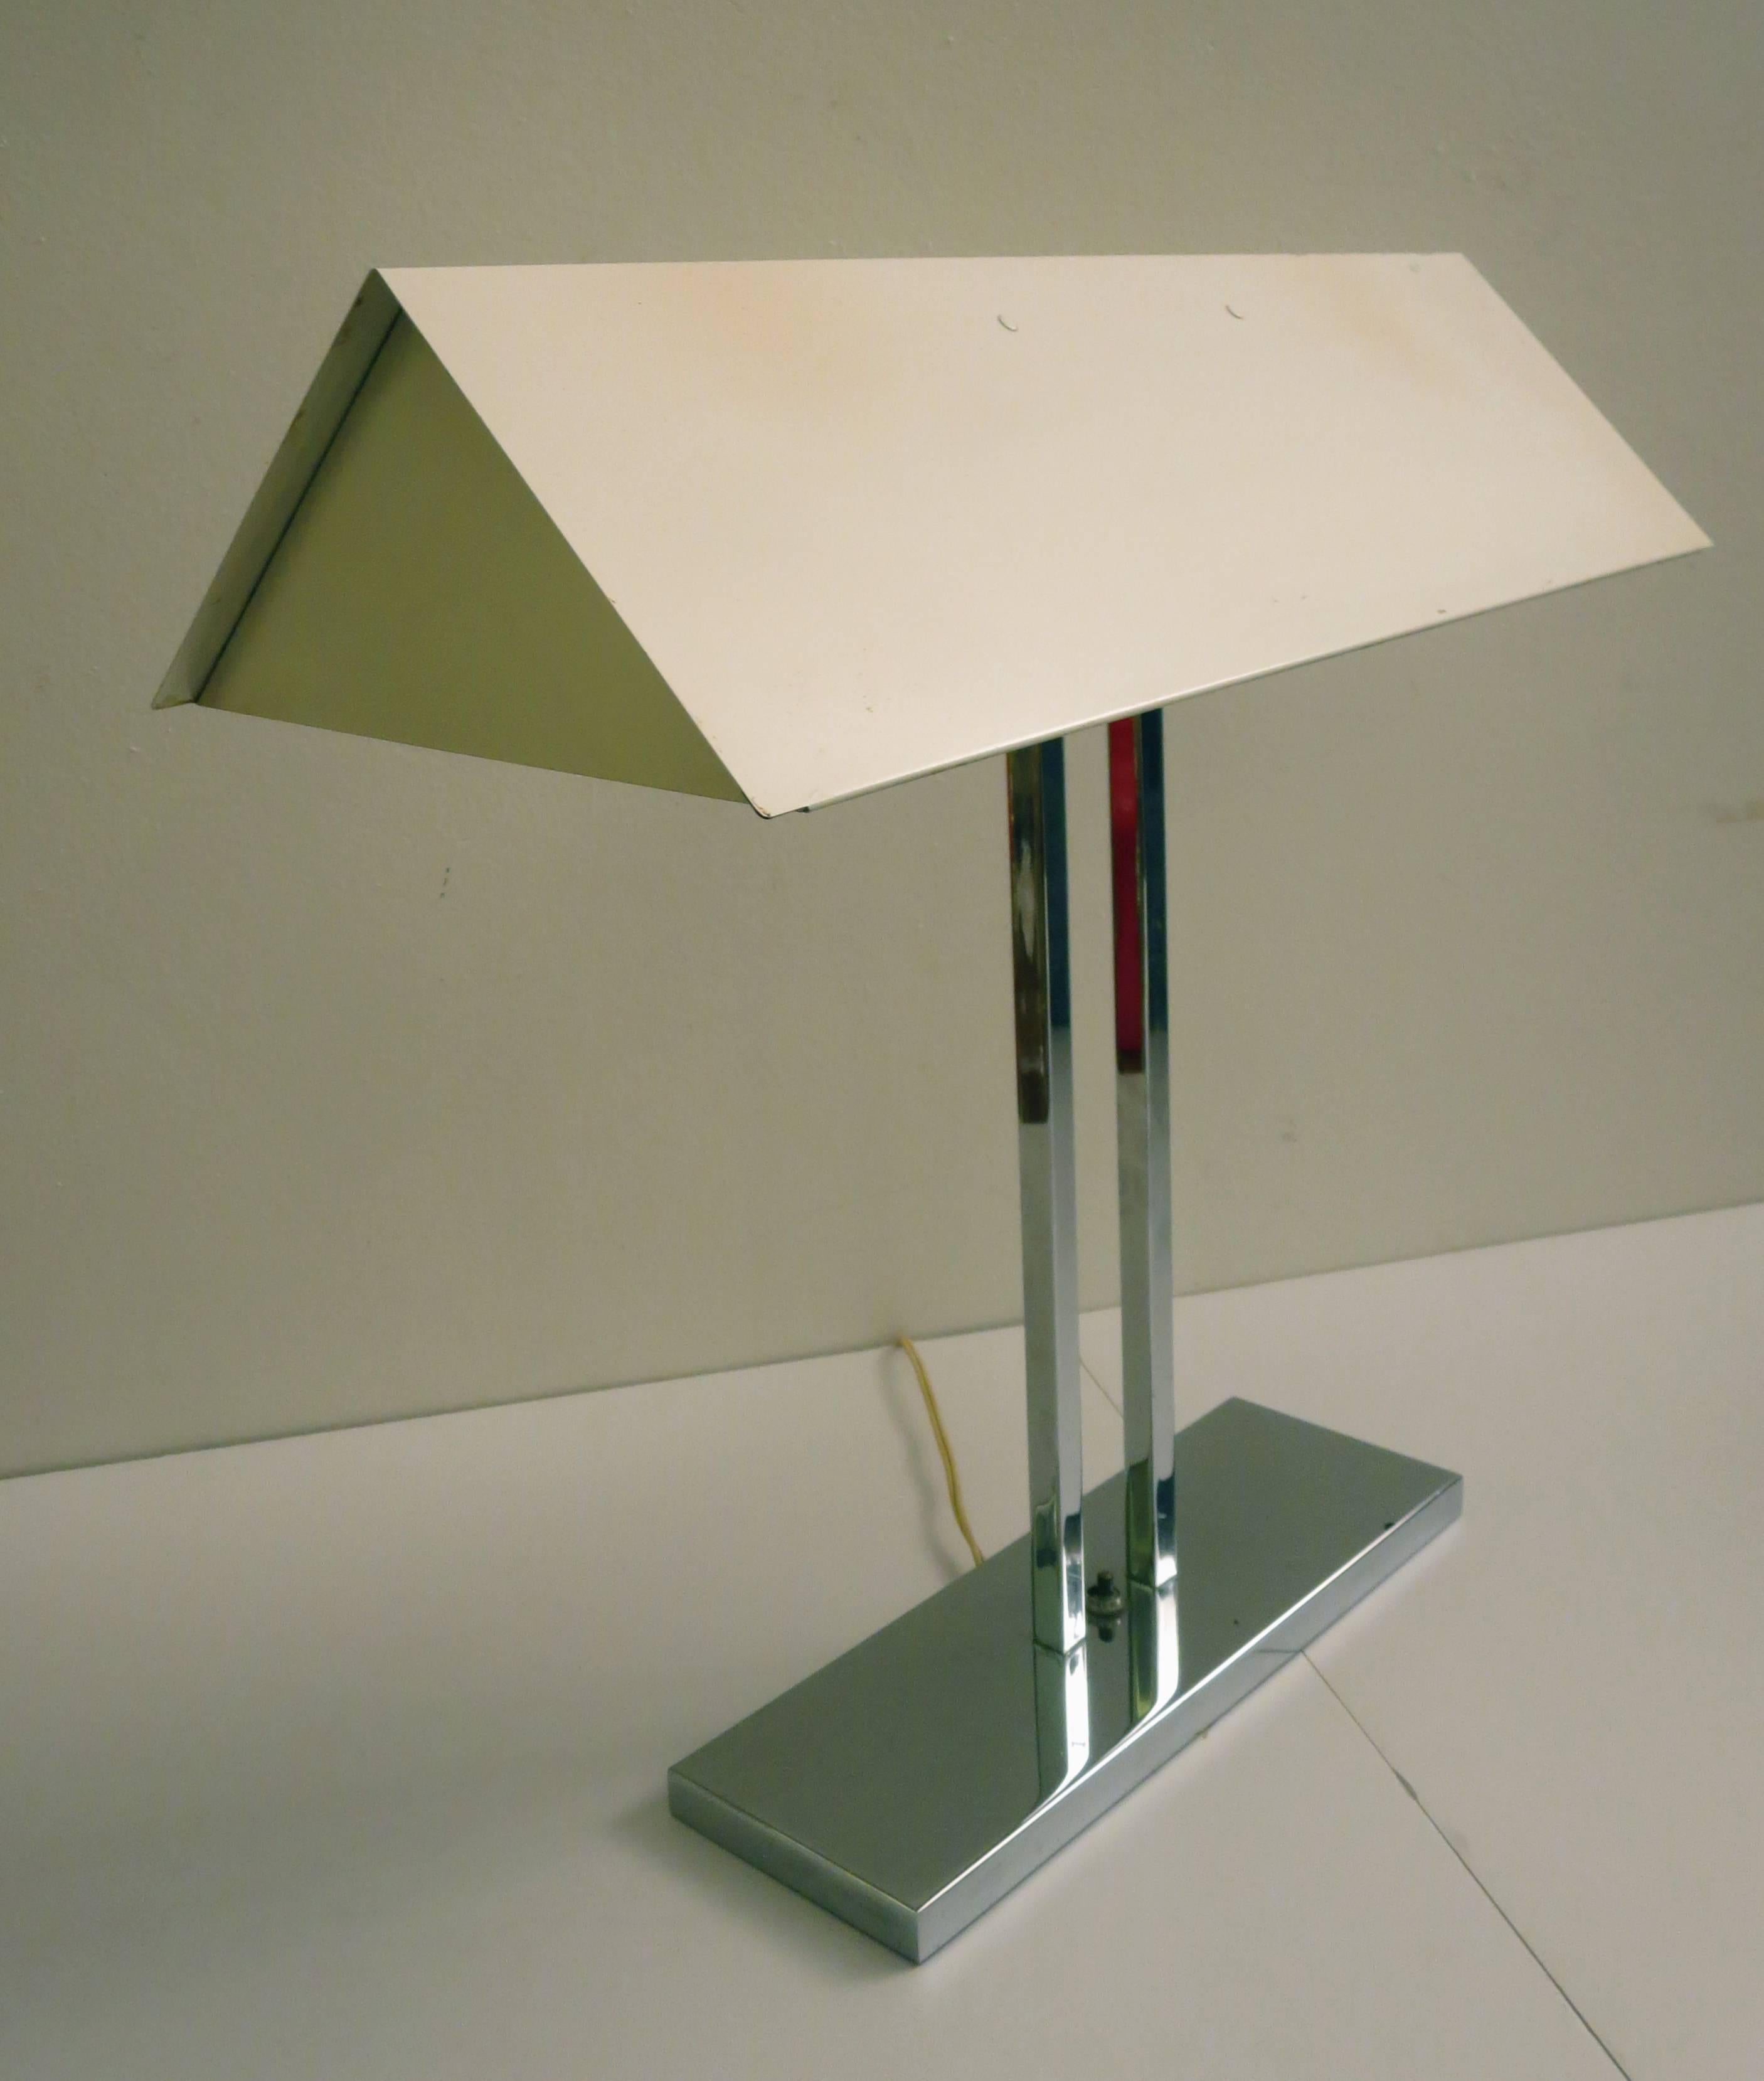 20th Century 1970s American Modern Architectural Minimalist Desk Table Lamp